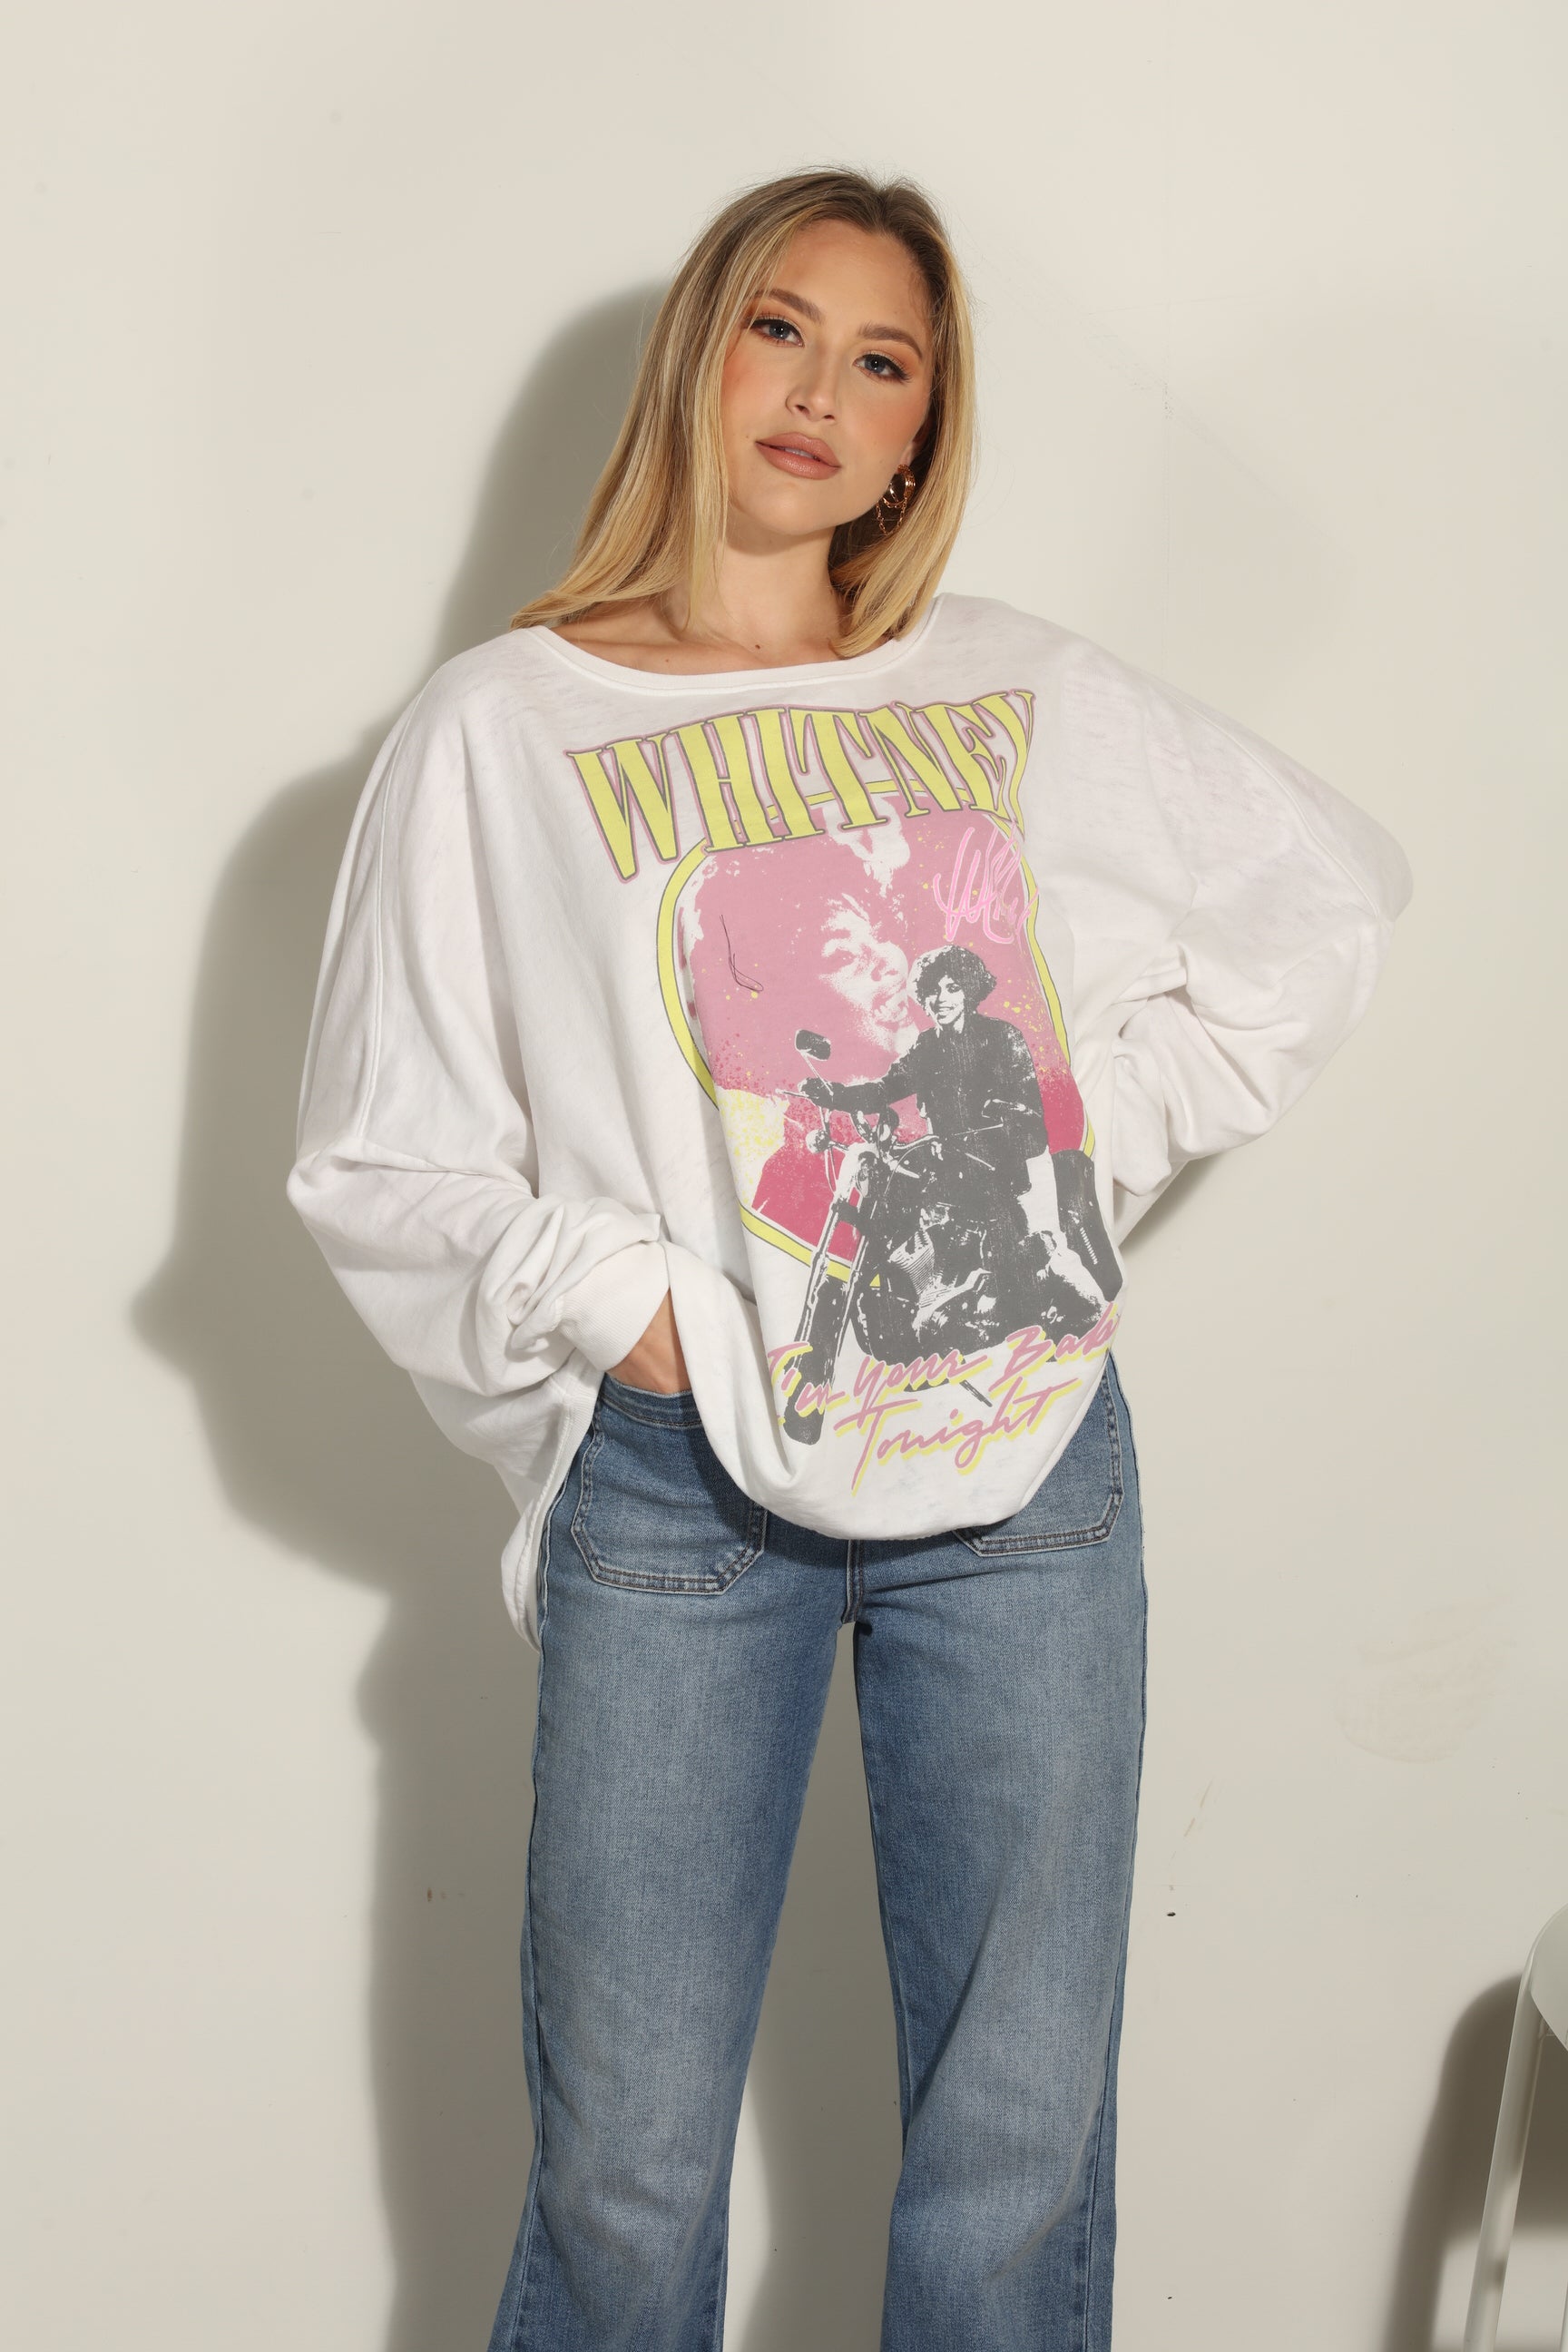 Whitney Houston One Size Sweatshirt-FINAL SALE